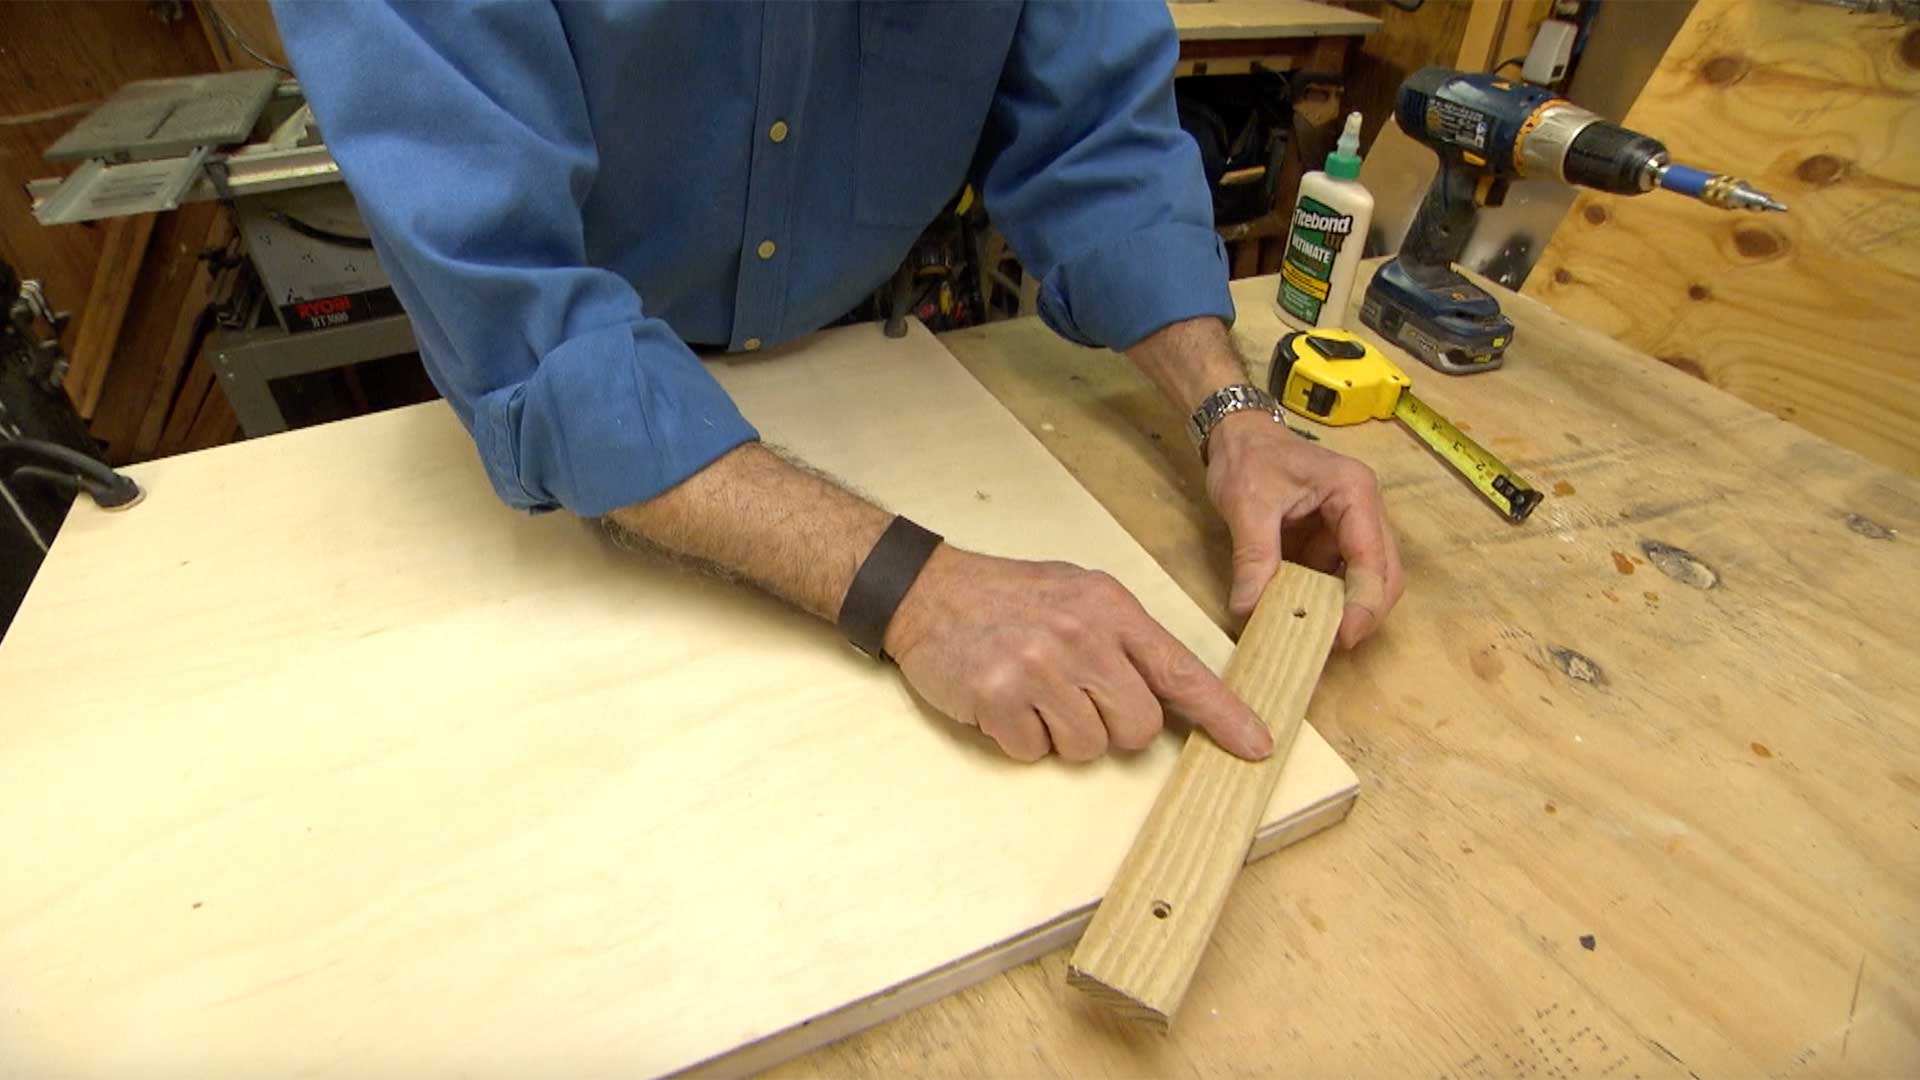 Joe Truini demonstrating how to create a corner clamp simple solution.